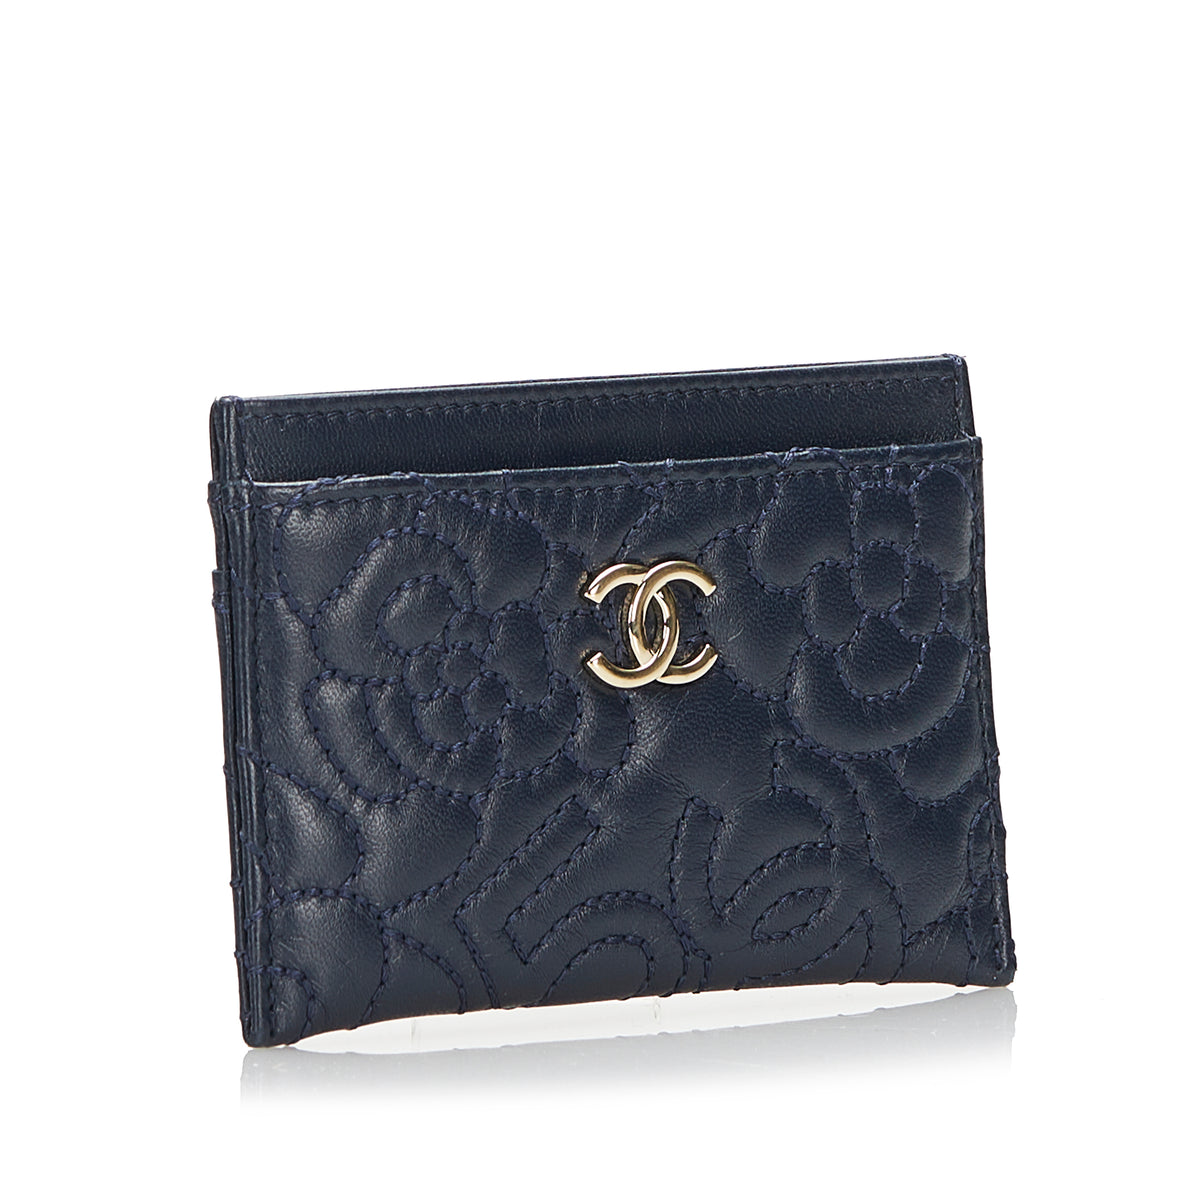 Chanel Card Case